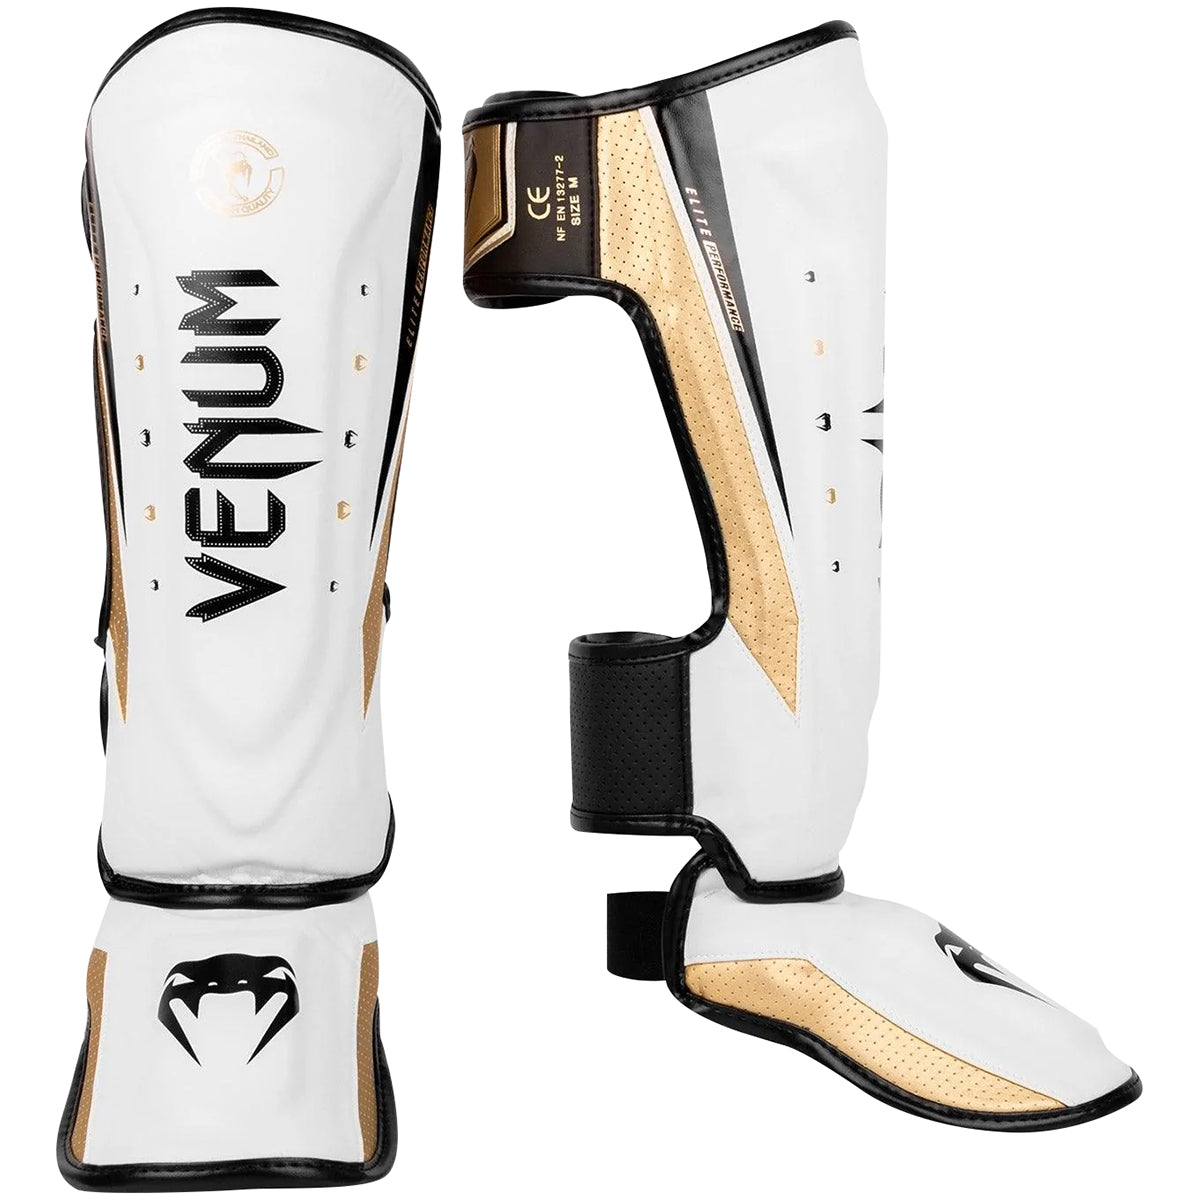 Venum Elite Evo Protective Shin Instep Guards - White/Gold Venum